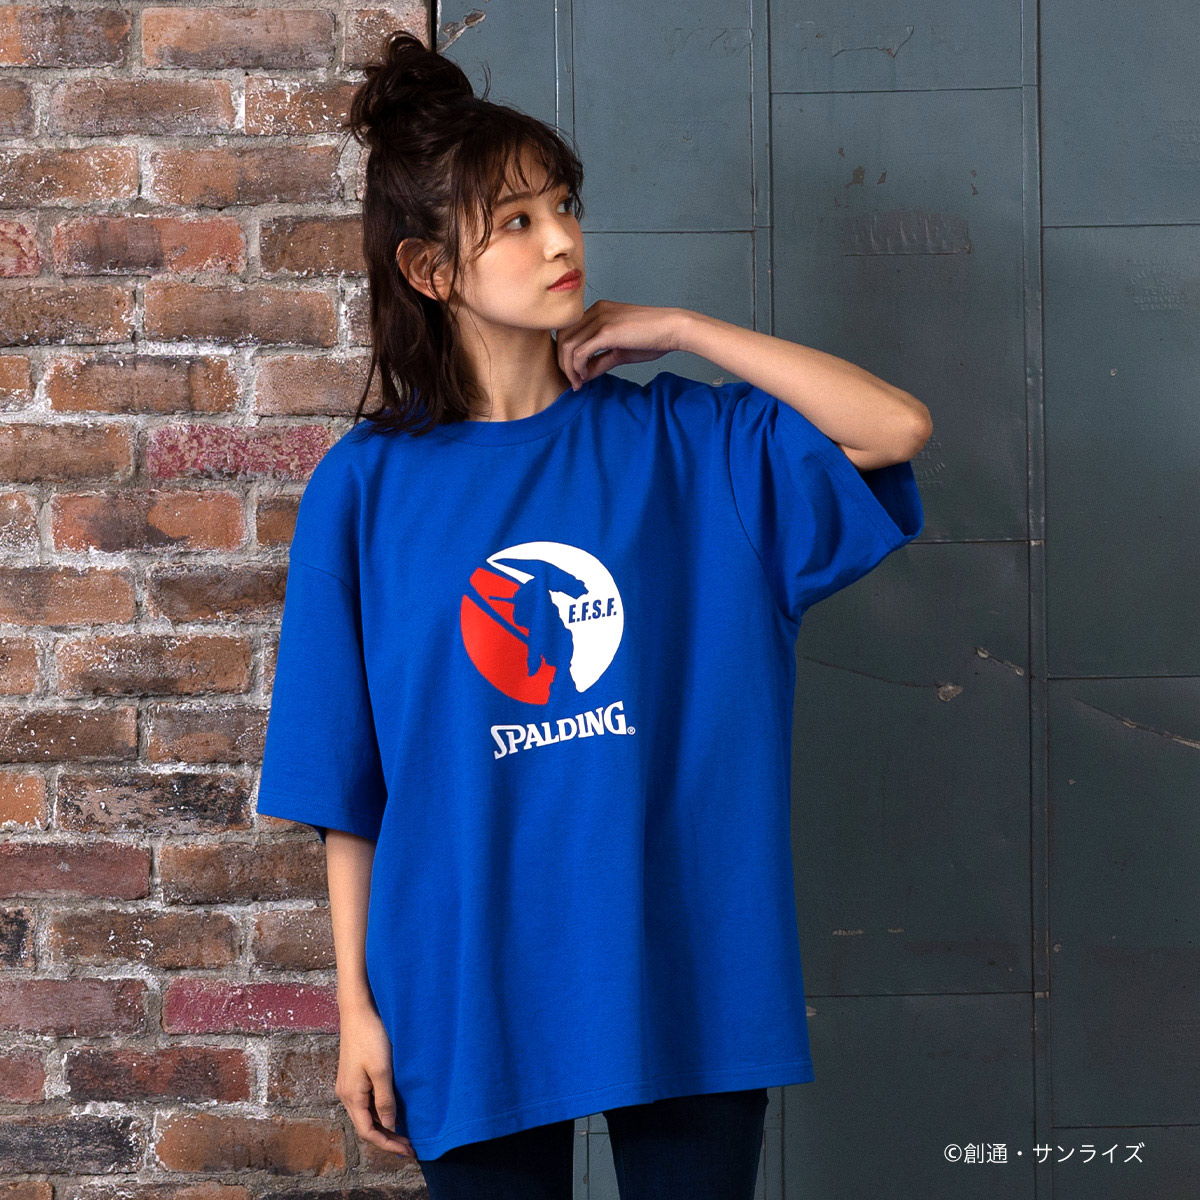 STRICT-G SPALDING『機動戦士ガンダム』Tシャツ ガンダムロゴ